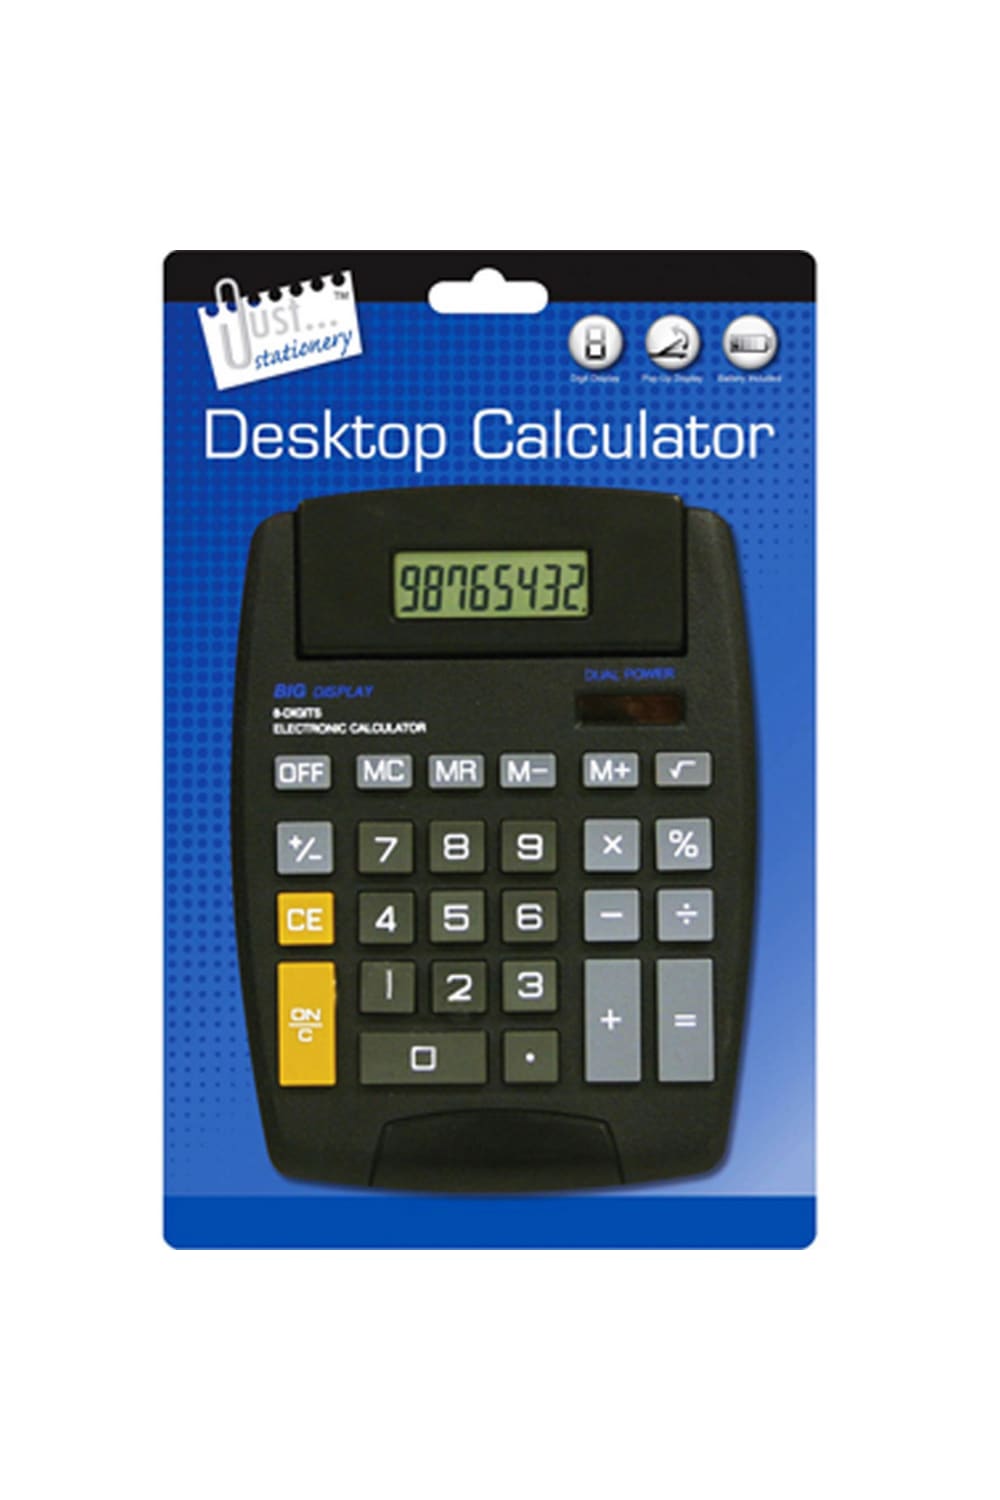 Just Stationery Pop Up Display Desk Calculator (Black) (One Size)